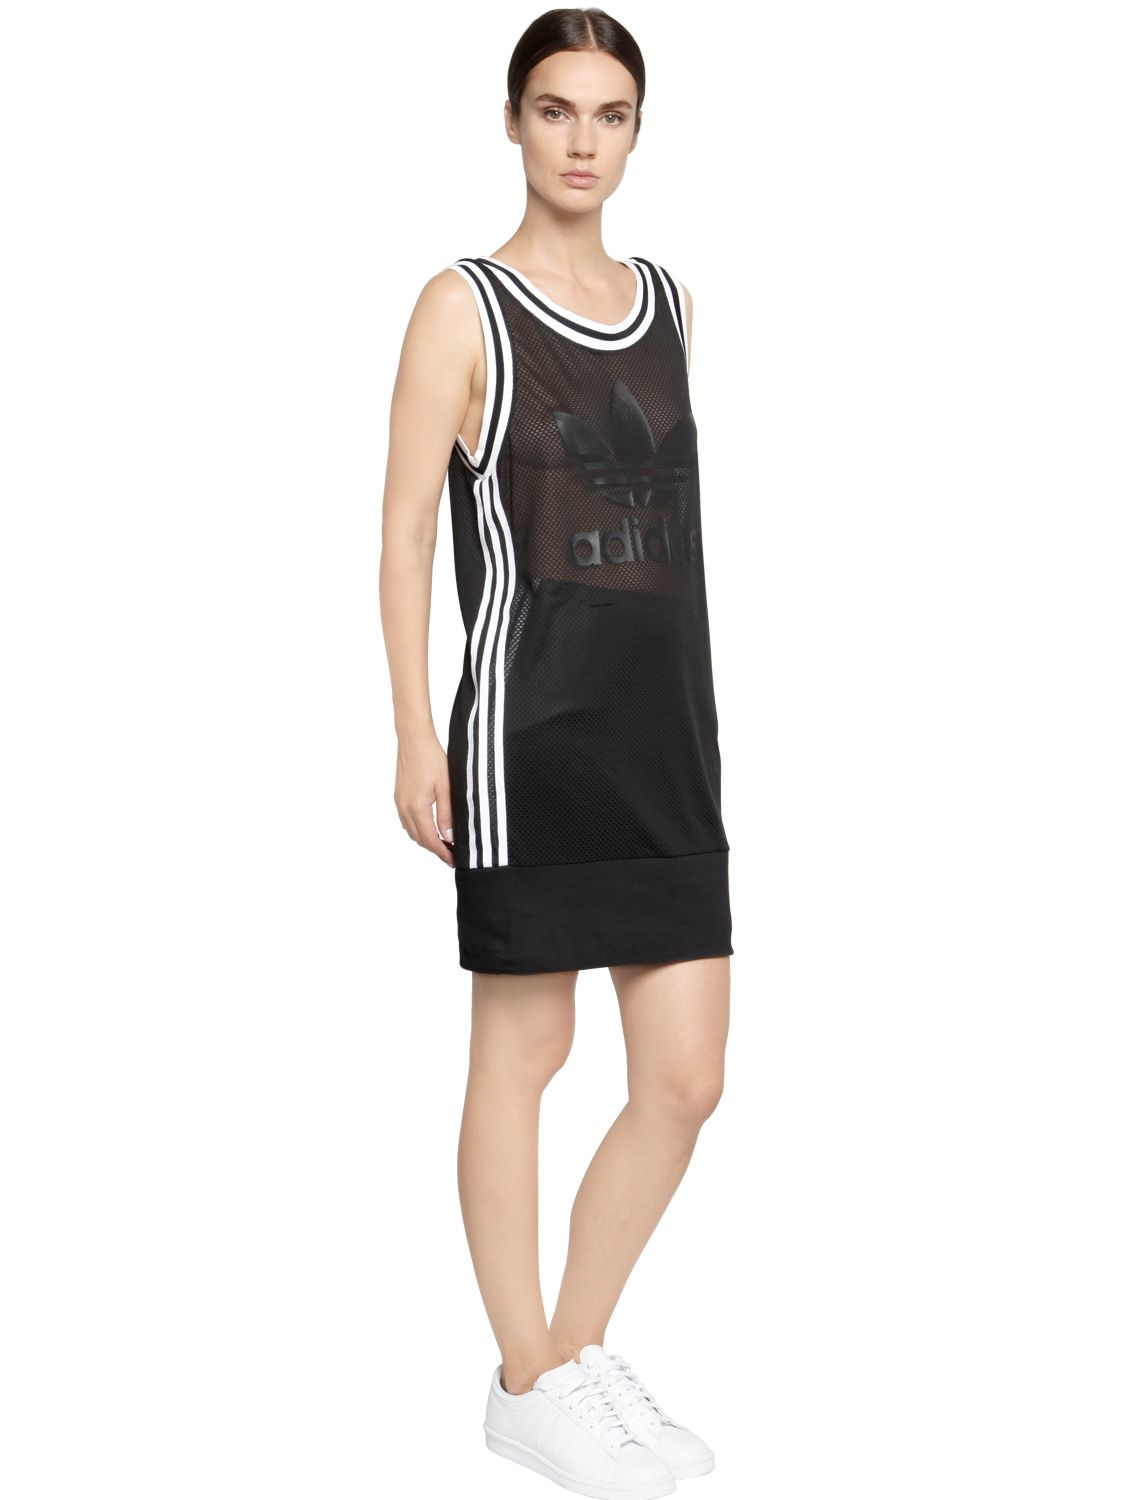 Lyst - Adidas Originals Basketball Mesh Tank Dress in Black